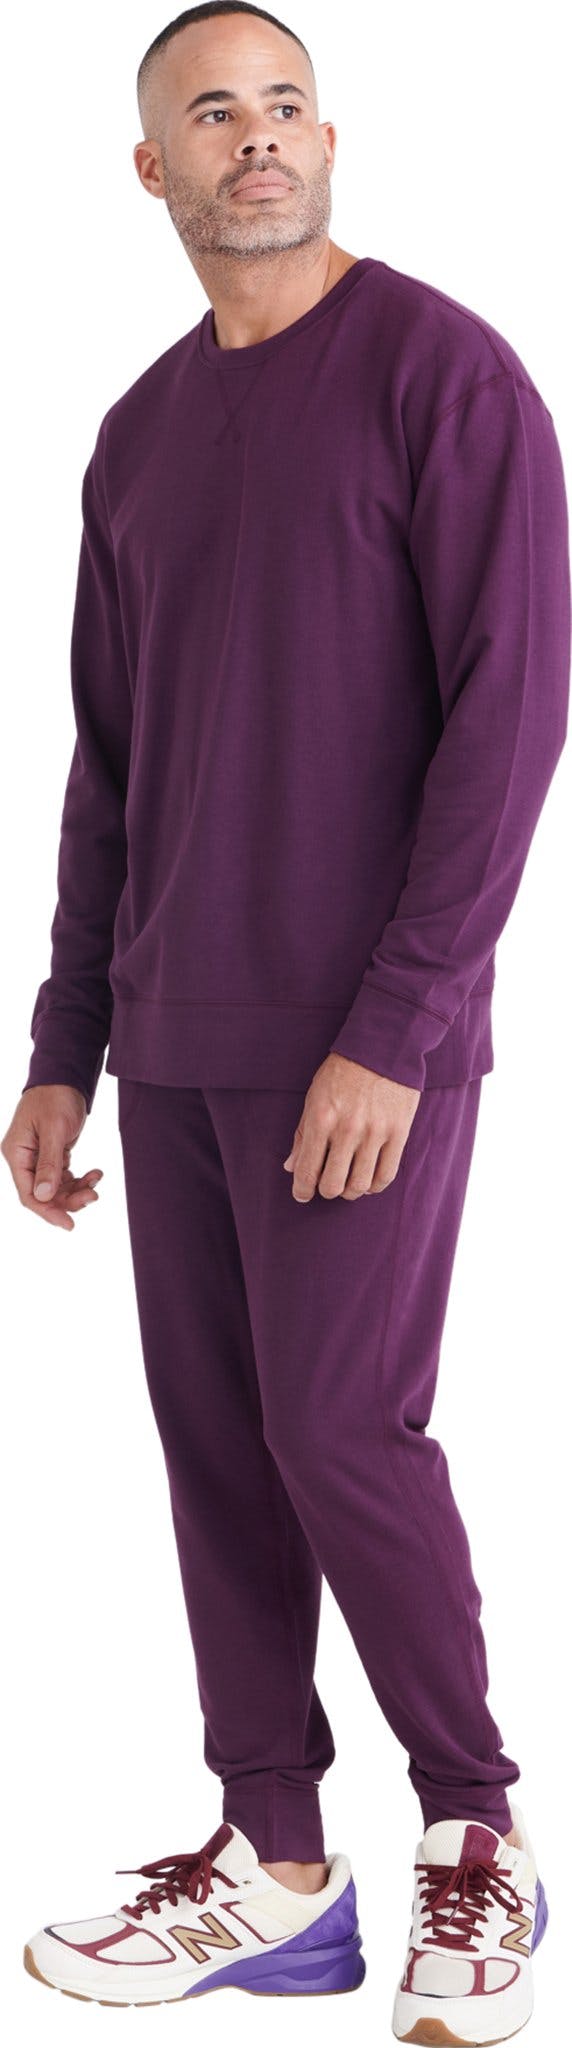 Product image for 3Six Five Long Sleeve Crew Neck Sweatshirt - Men's